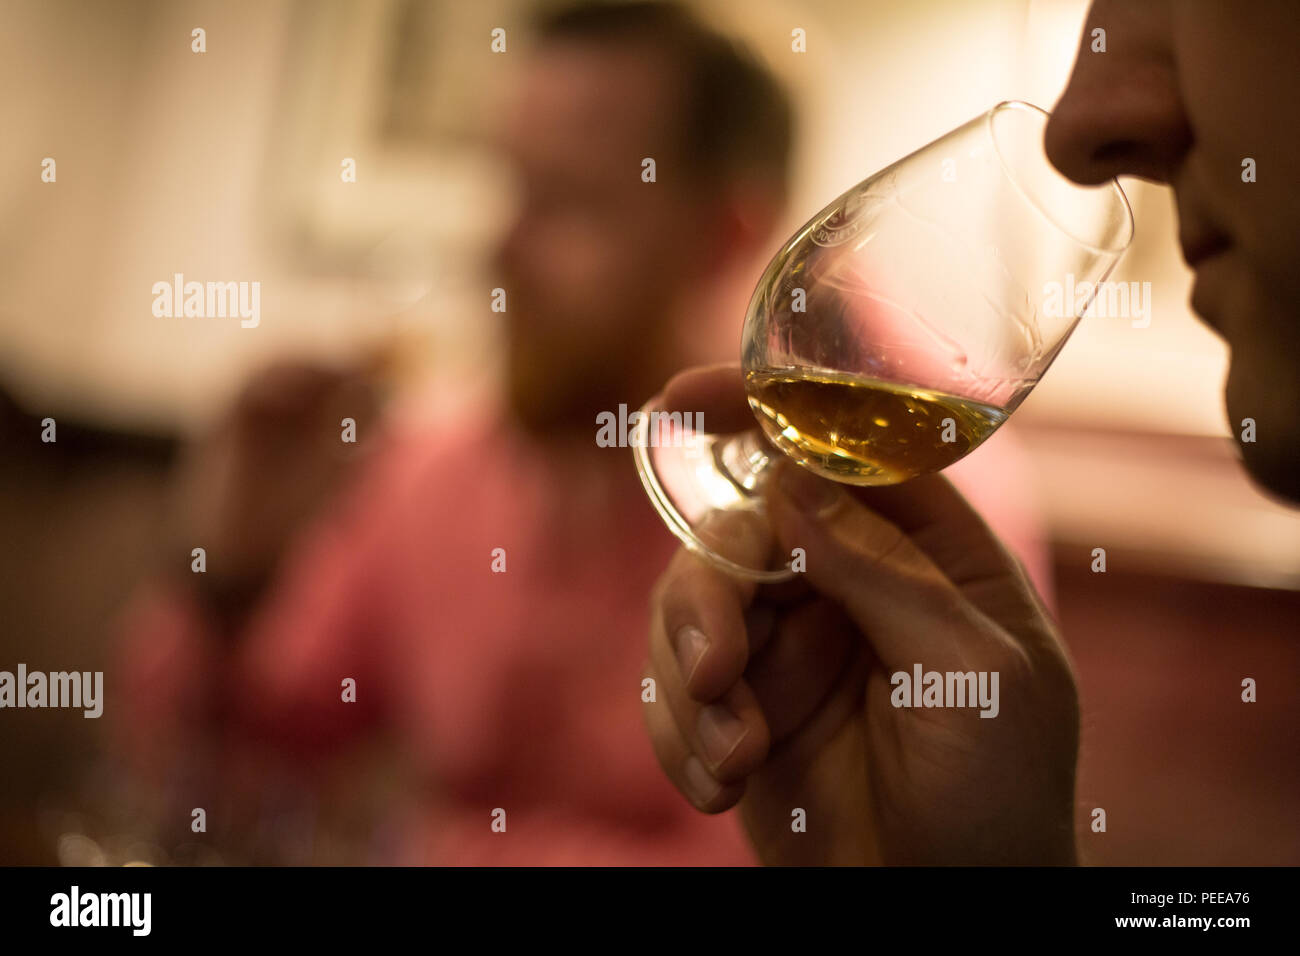 Scottish single malt whisky tasting session. Stock Photo